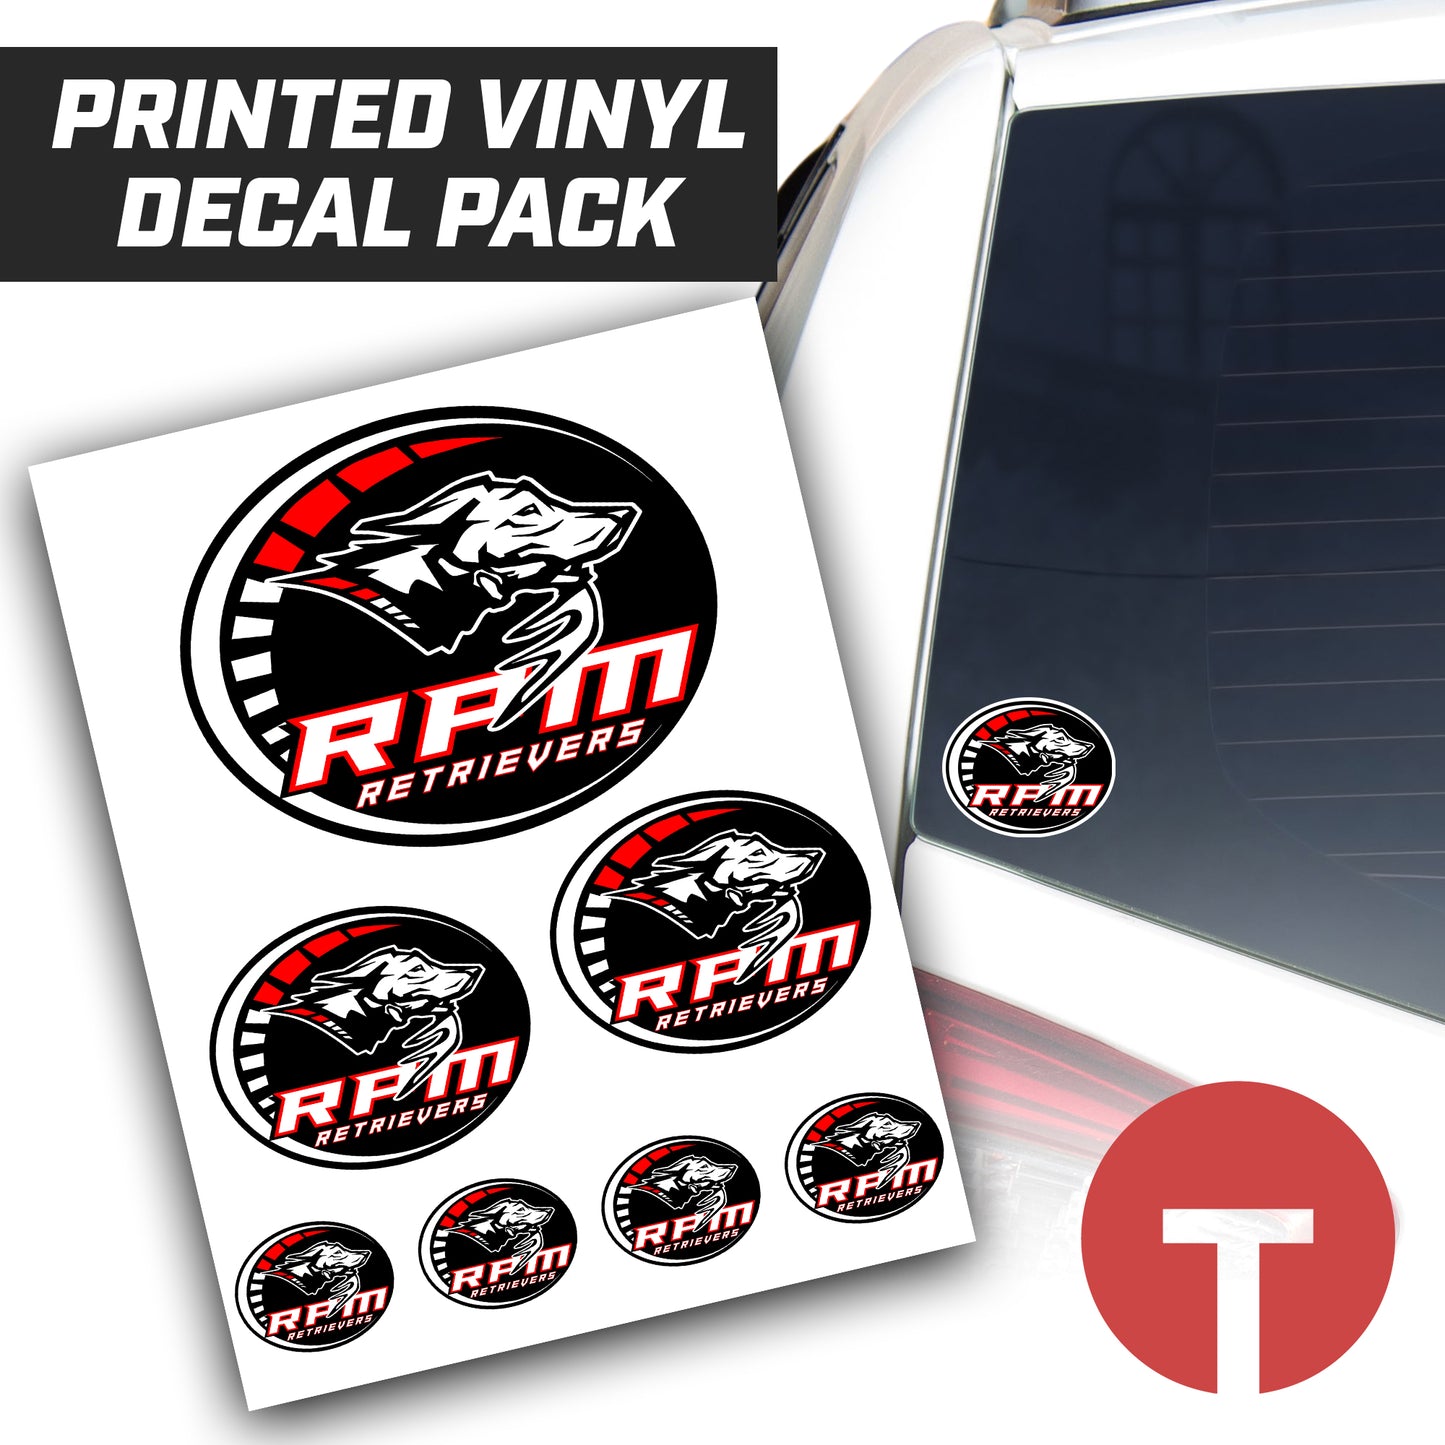 RPM Retrievers - Logo Vinyl Decal Pack